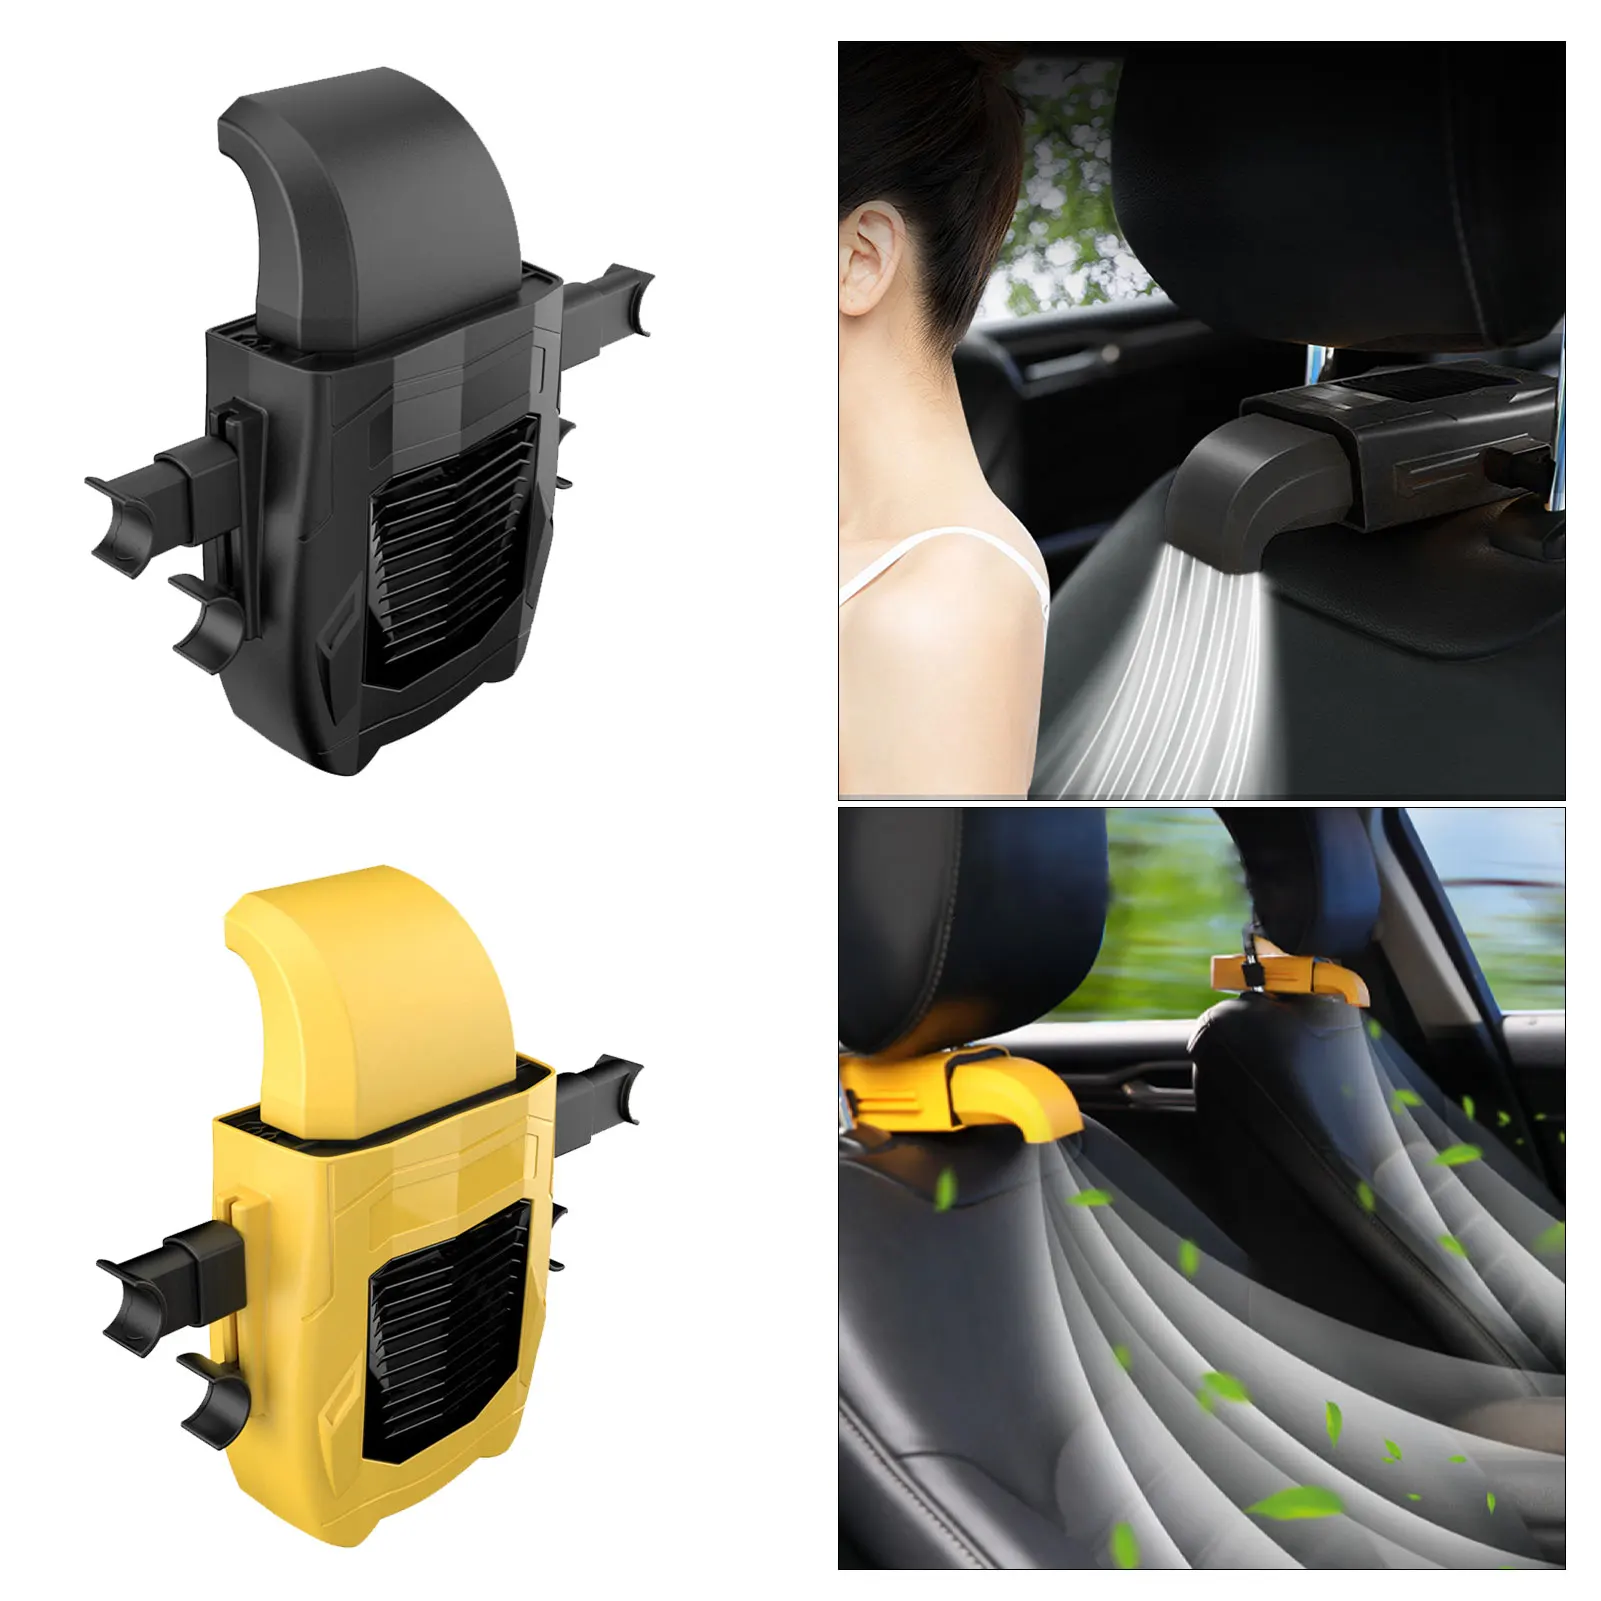 Cooling Car Fan Automobile Vehicle Seats Fan Powerful Quiet Ventilation Electric Car Fans with Comfortable USB Plug for Car